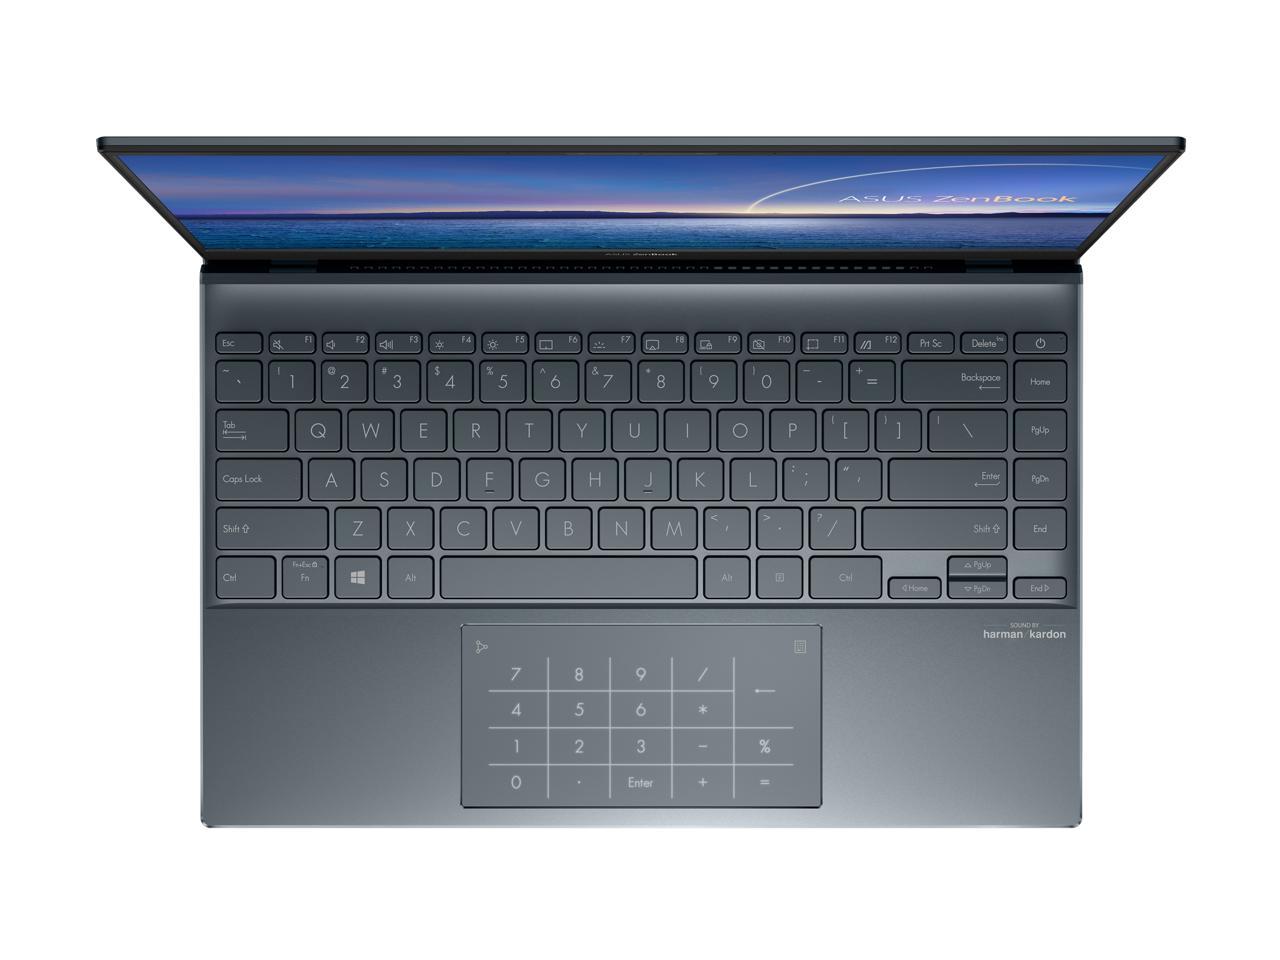 ASUS ZenBook 14 Ultra-Slim Laptop 14" Full HD NanoEdge Bezel Display, Intel Core i5-1035G1, 8 GB RAM, 512 GB PCIe SSD, NumberPad, Thunderbolt 3, Windows 10 Home, Pine Grey, UX425JA-EB51